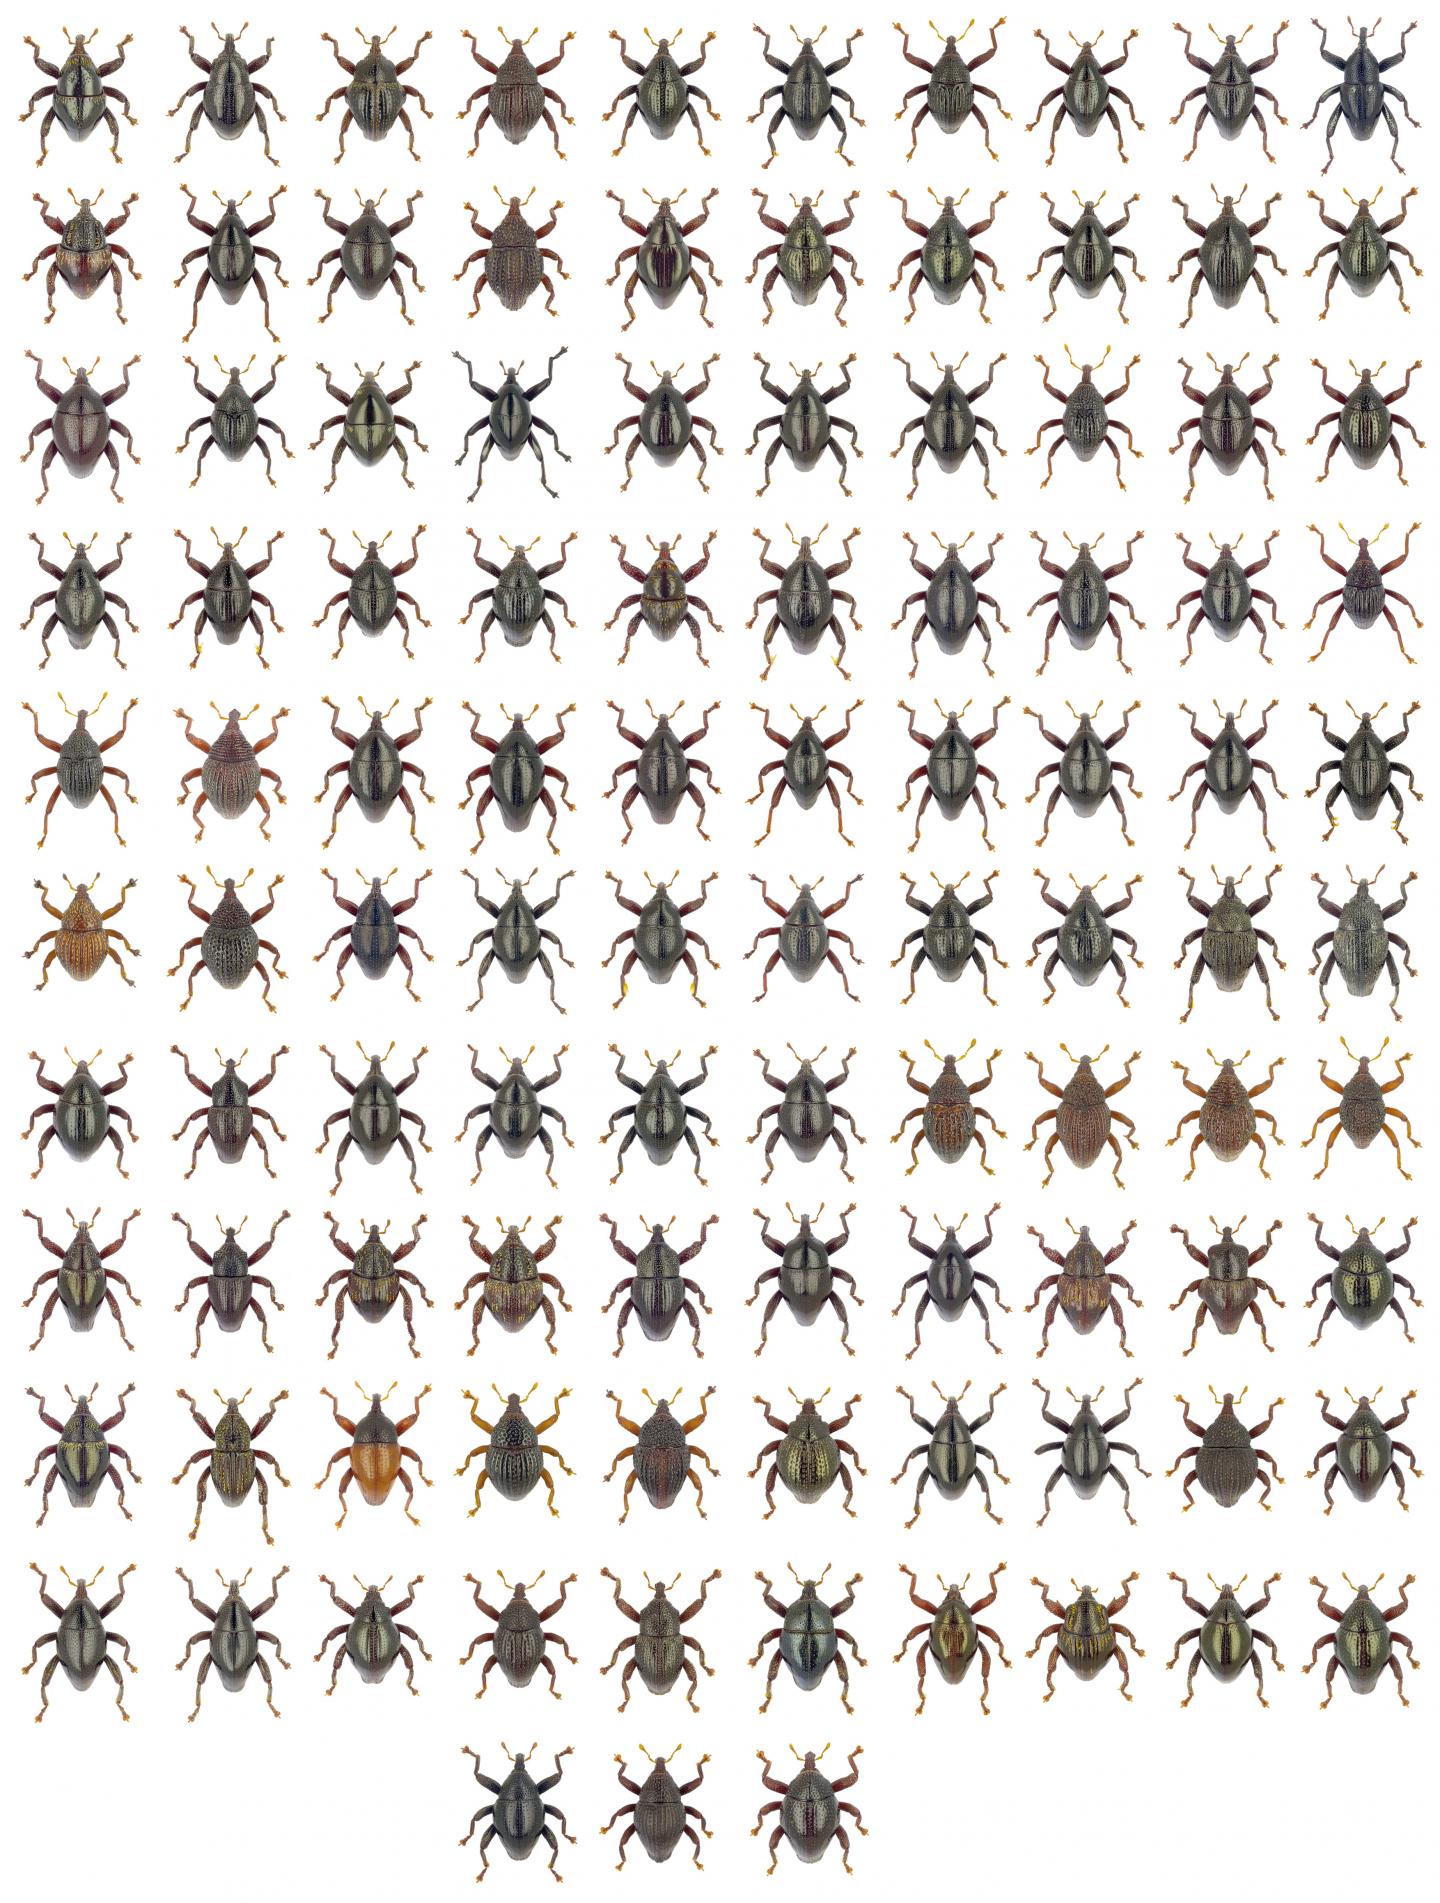 103 New Weevil Species